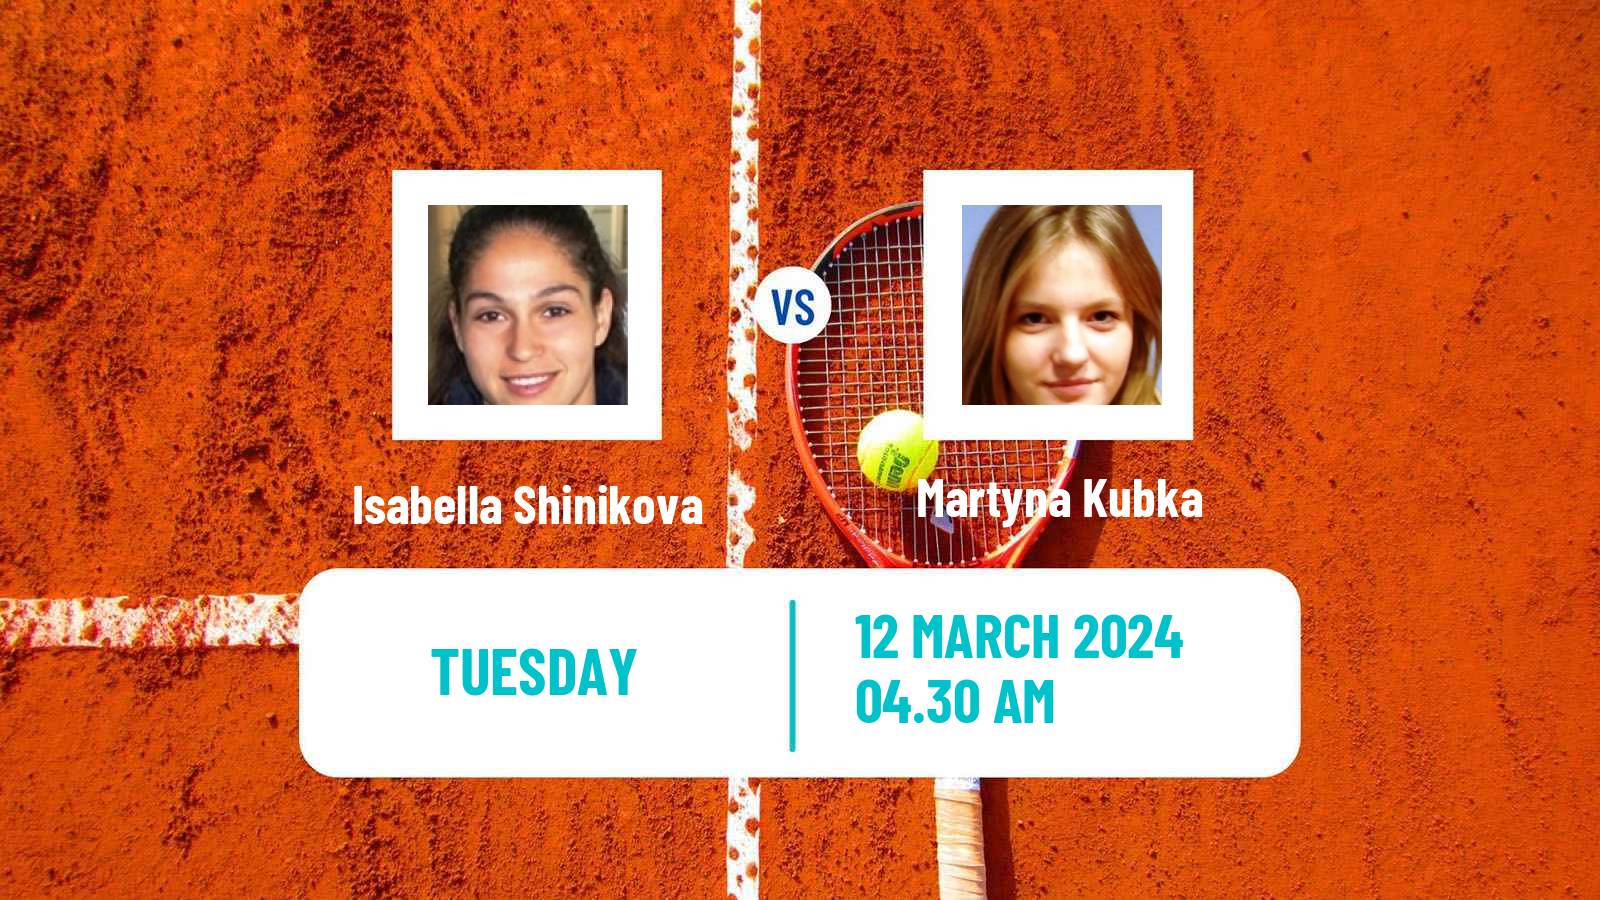 Tennis ITF W35 Solarino 2 Women Isabella Shinikova - Martyna Kubka